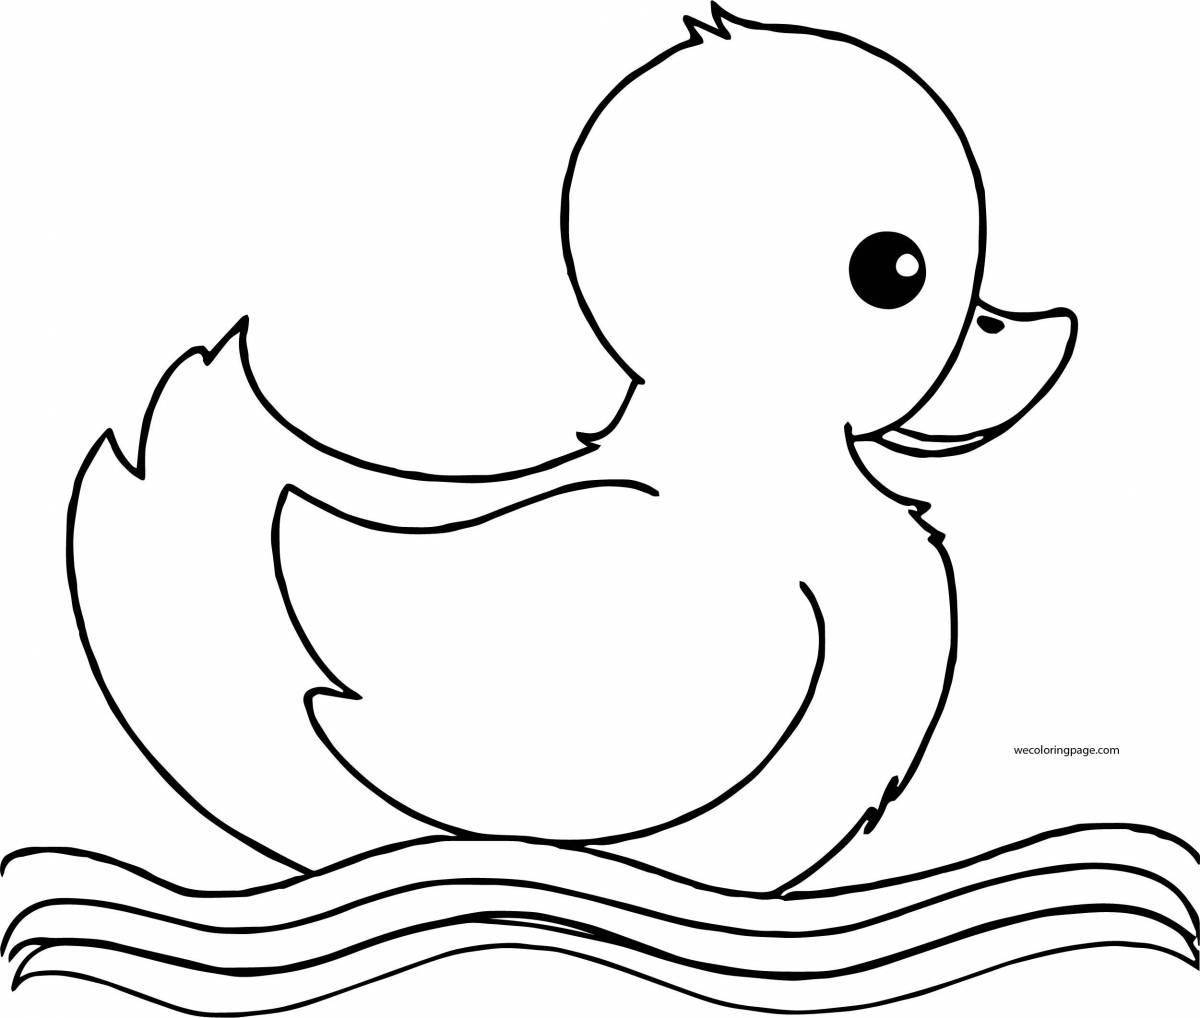 Humorous duck coloring book